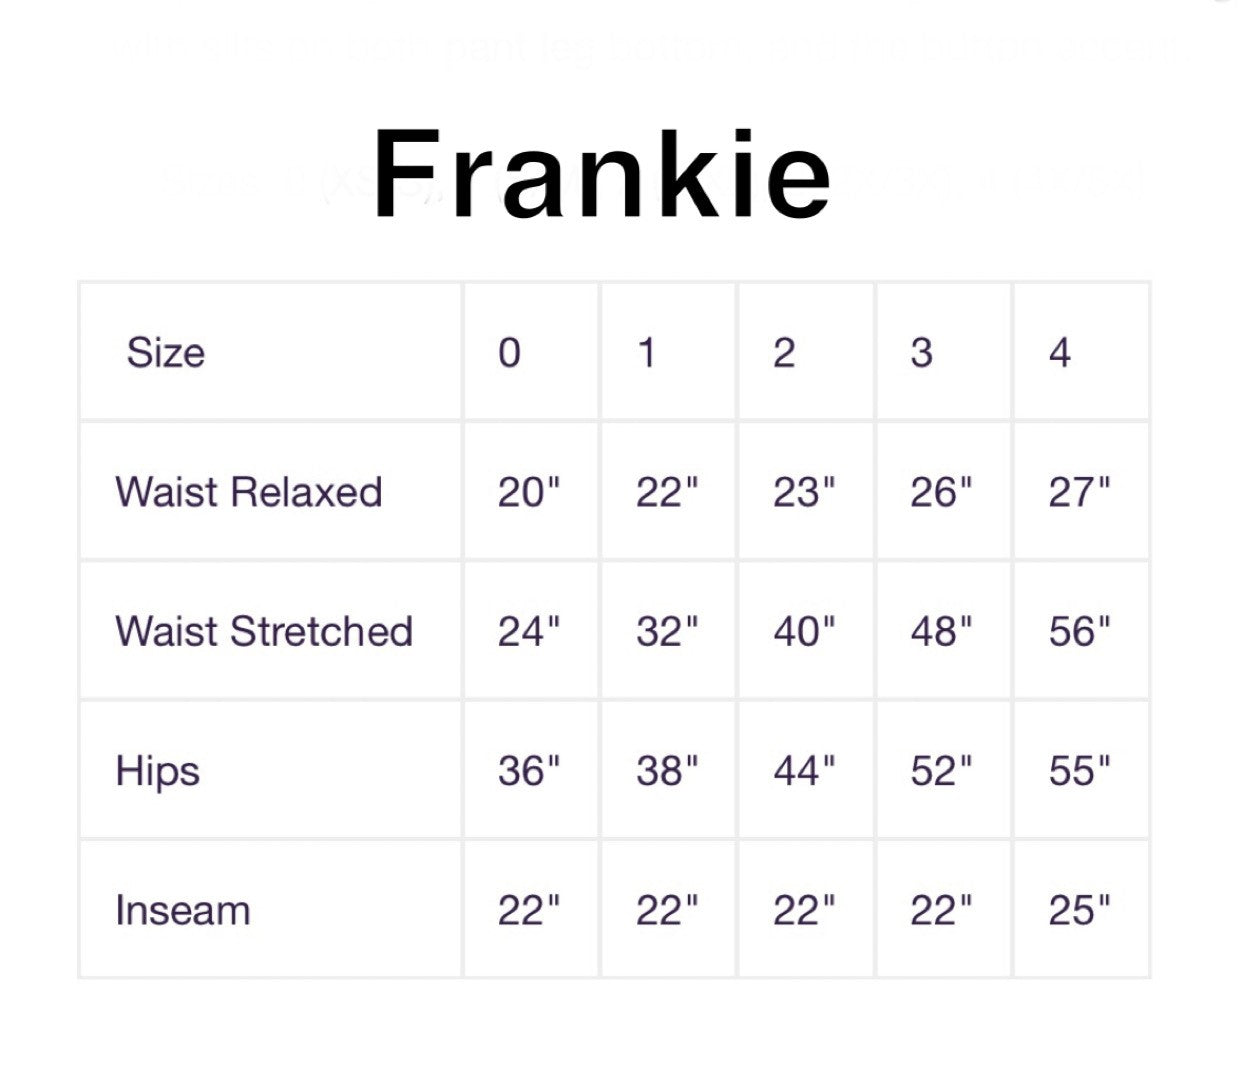 The Original Frankie Pant - Perfect Fit Guaranteed